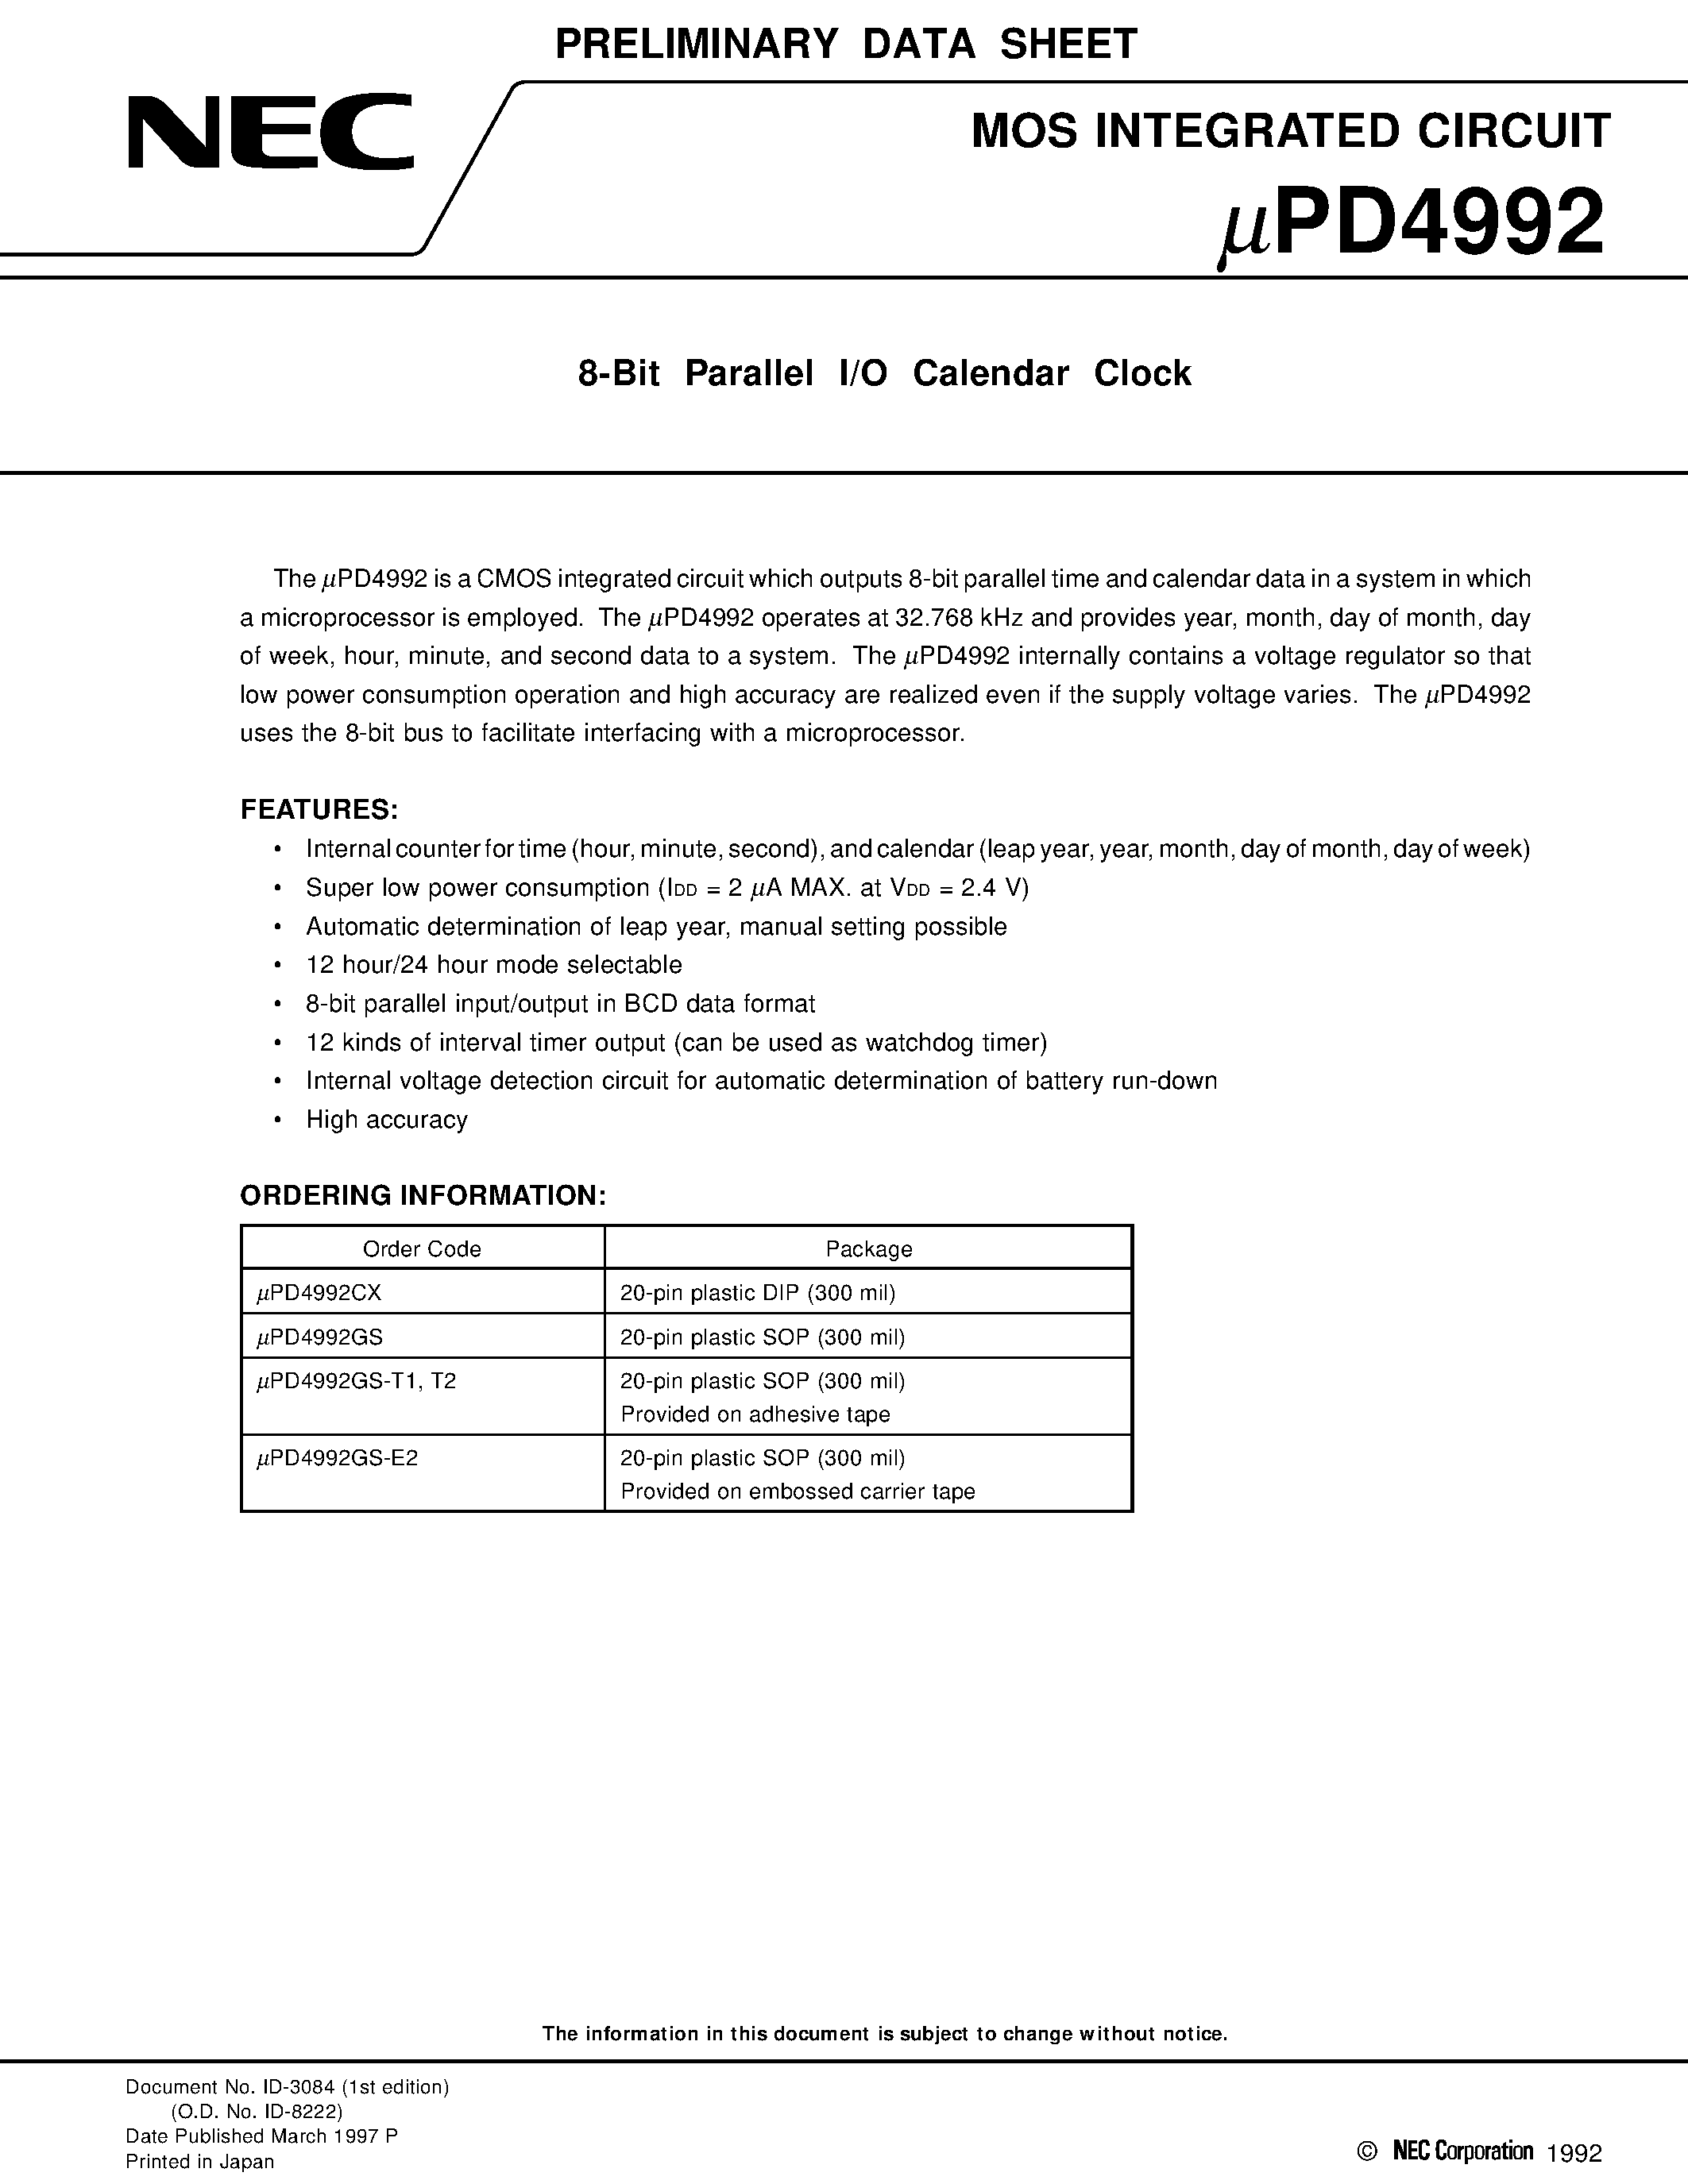 Datasheet UPD4992 - 8-Bit Parallel I/O Calendar Clock page 1